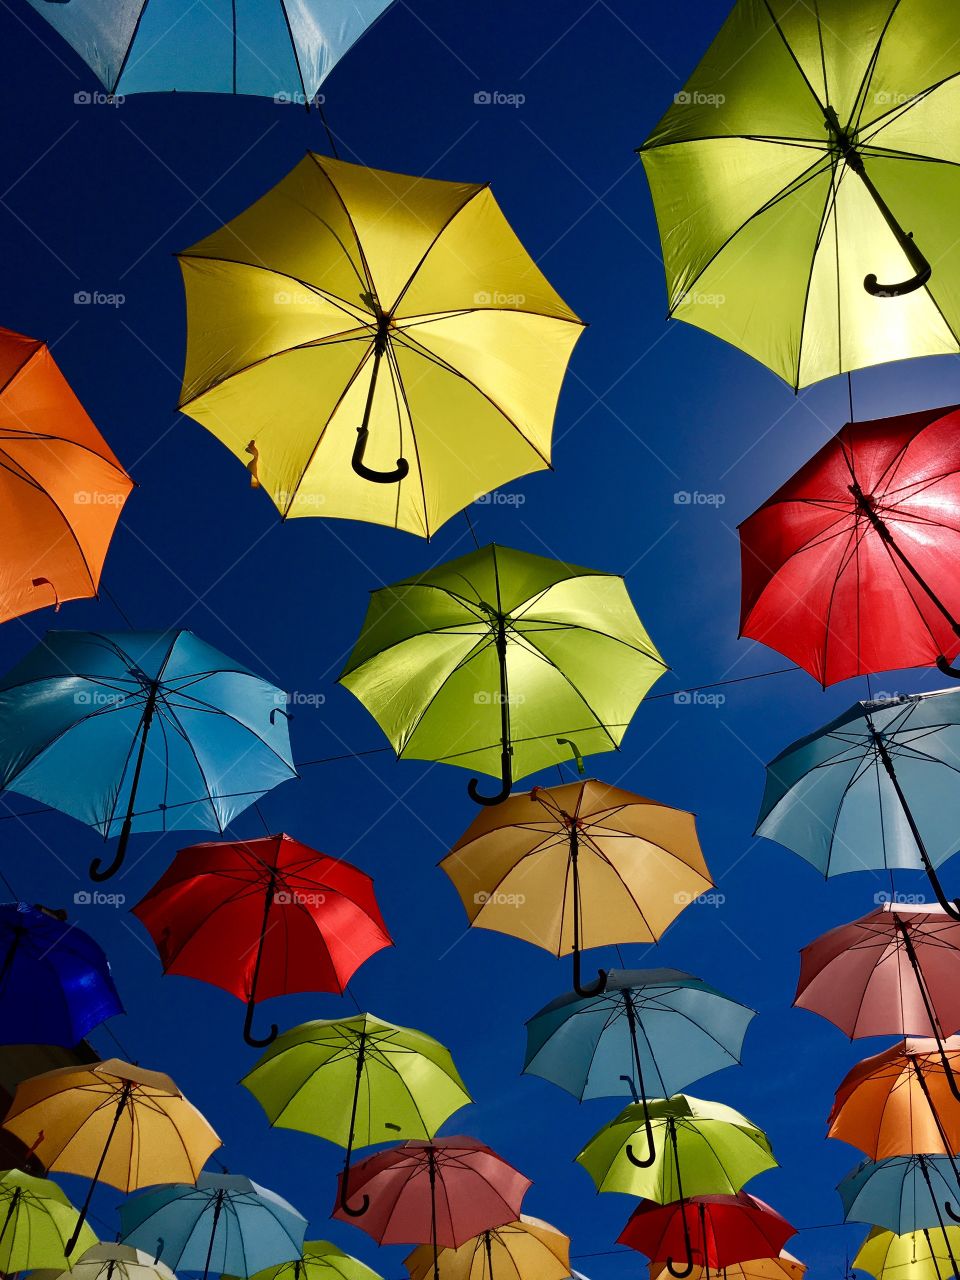 artistic representation with umbrellas in Novigrad, Croatia